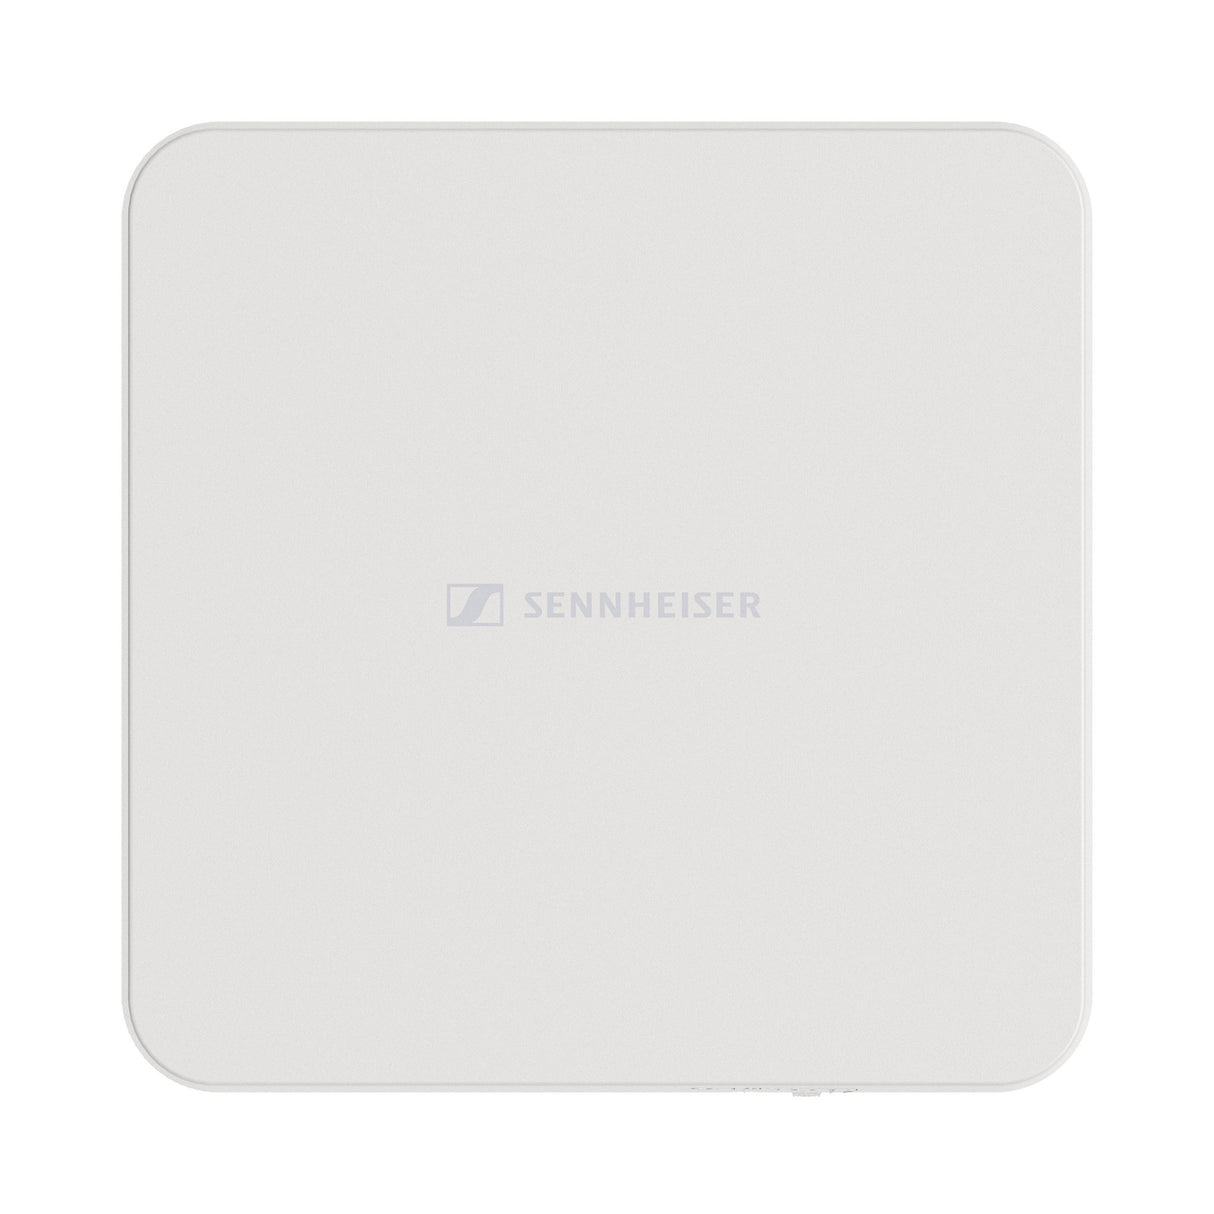 Sennheiser AWM UHF I Active Directional Antenna for Evolution Wireless Systems, 470-694 MHz